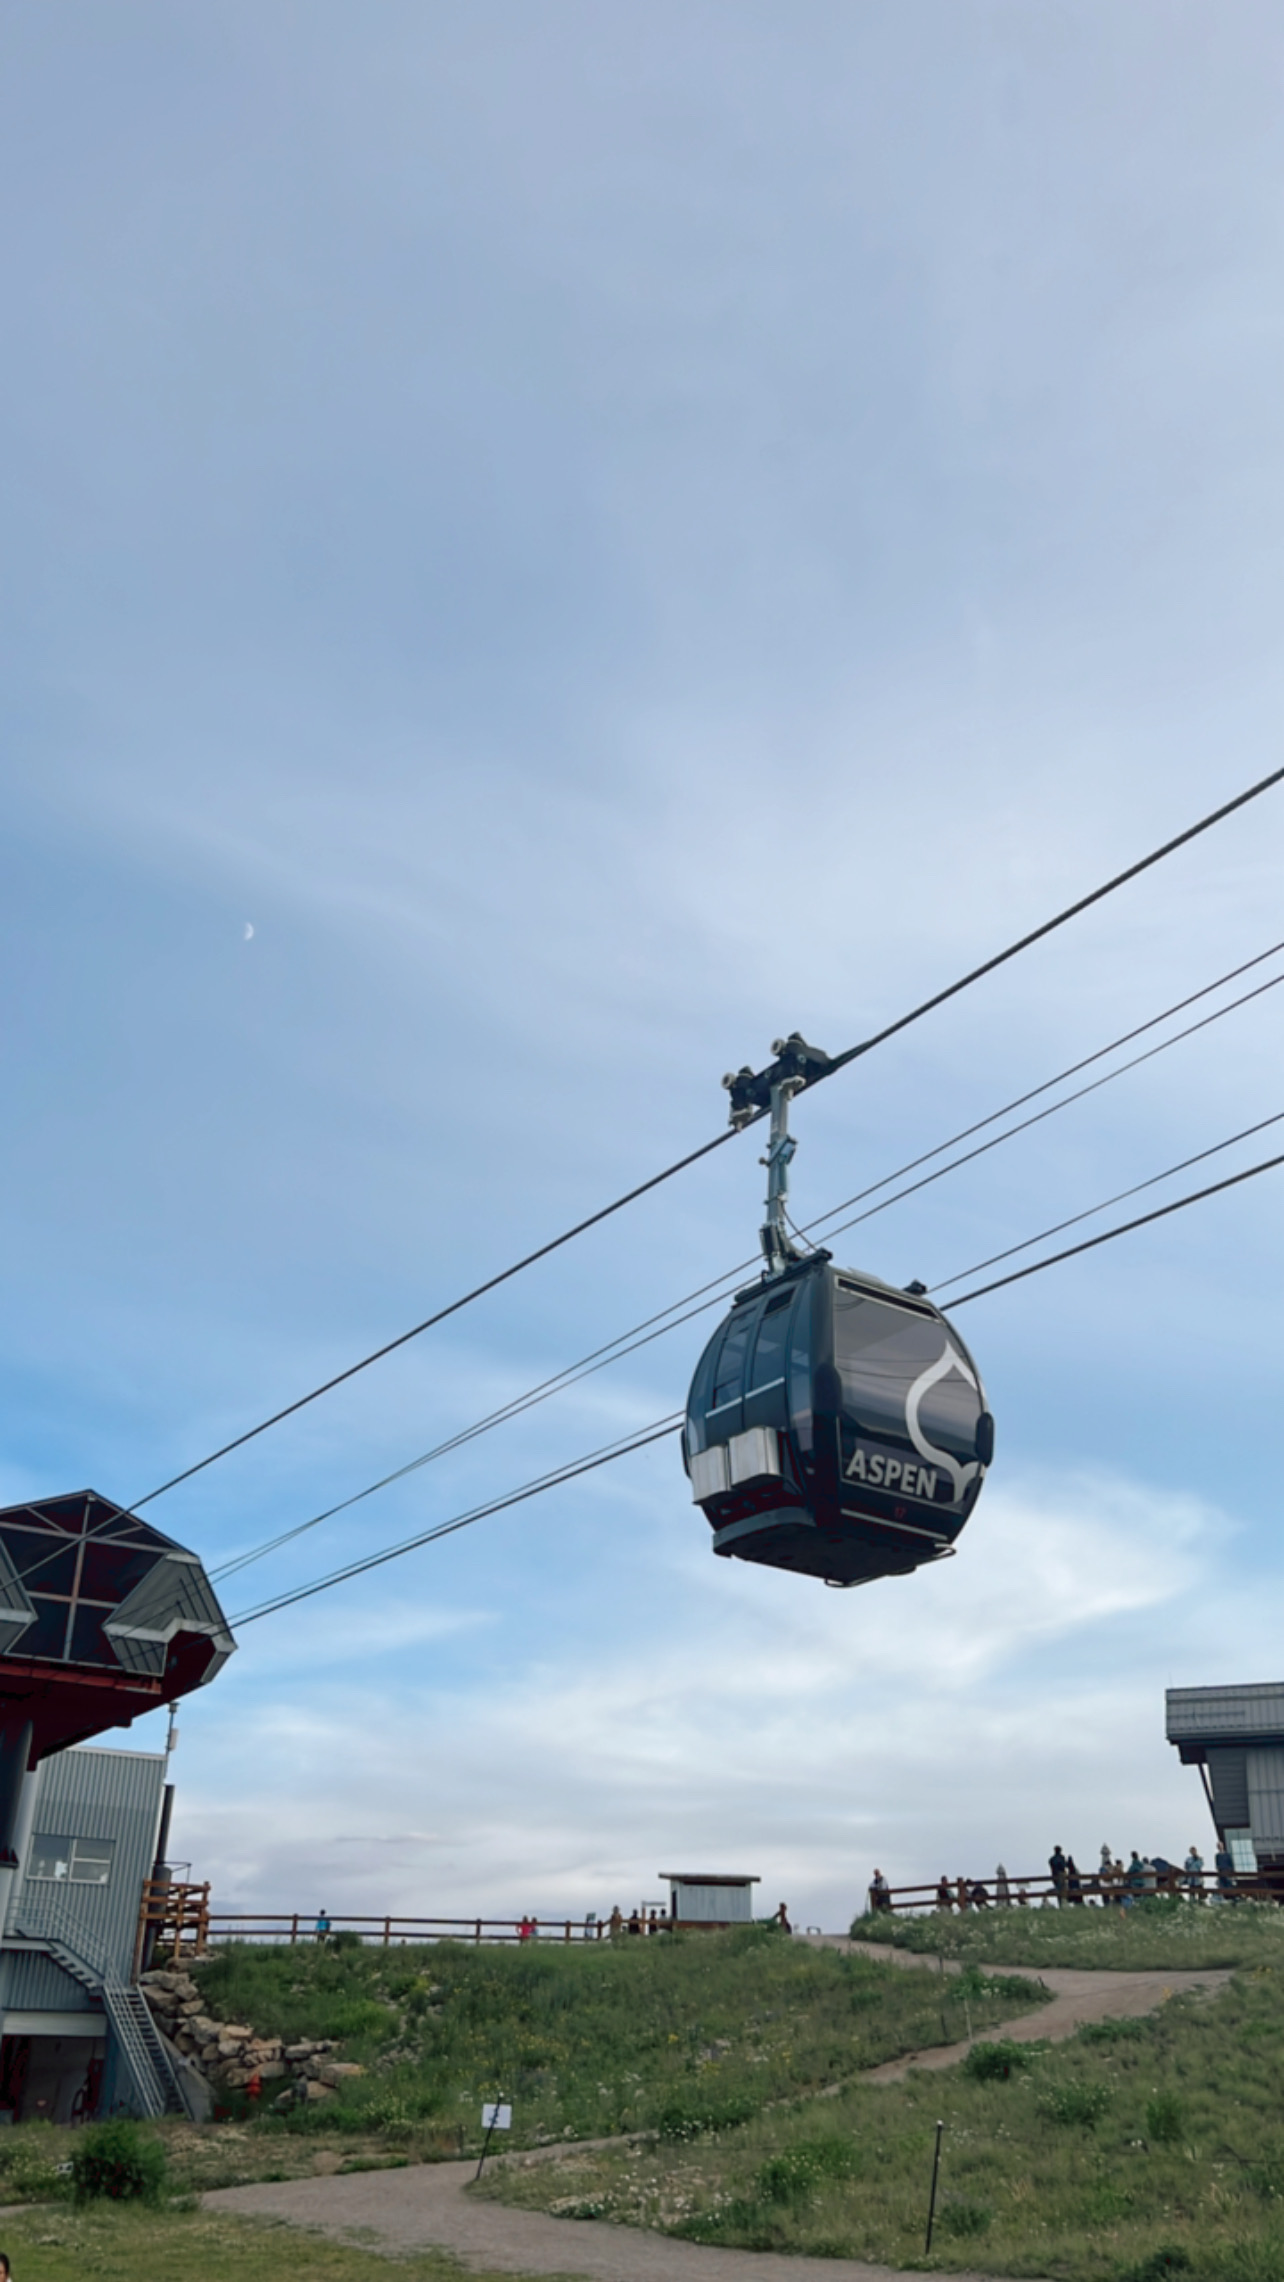 take the Silver Queen gondola to the top of Aspen mountain for breathtaking views #silverqueen #gondola #aspen #travelwithkids